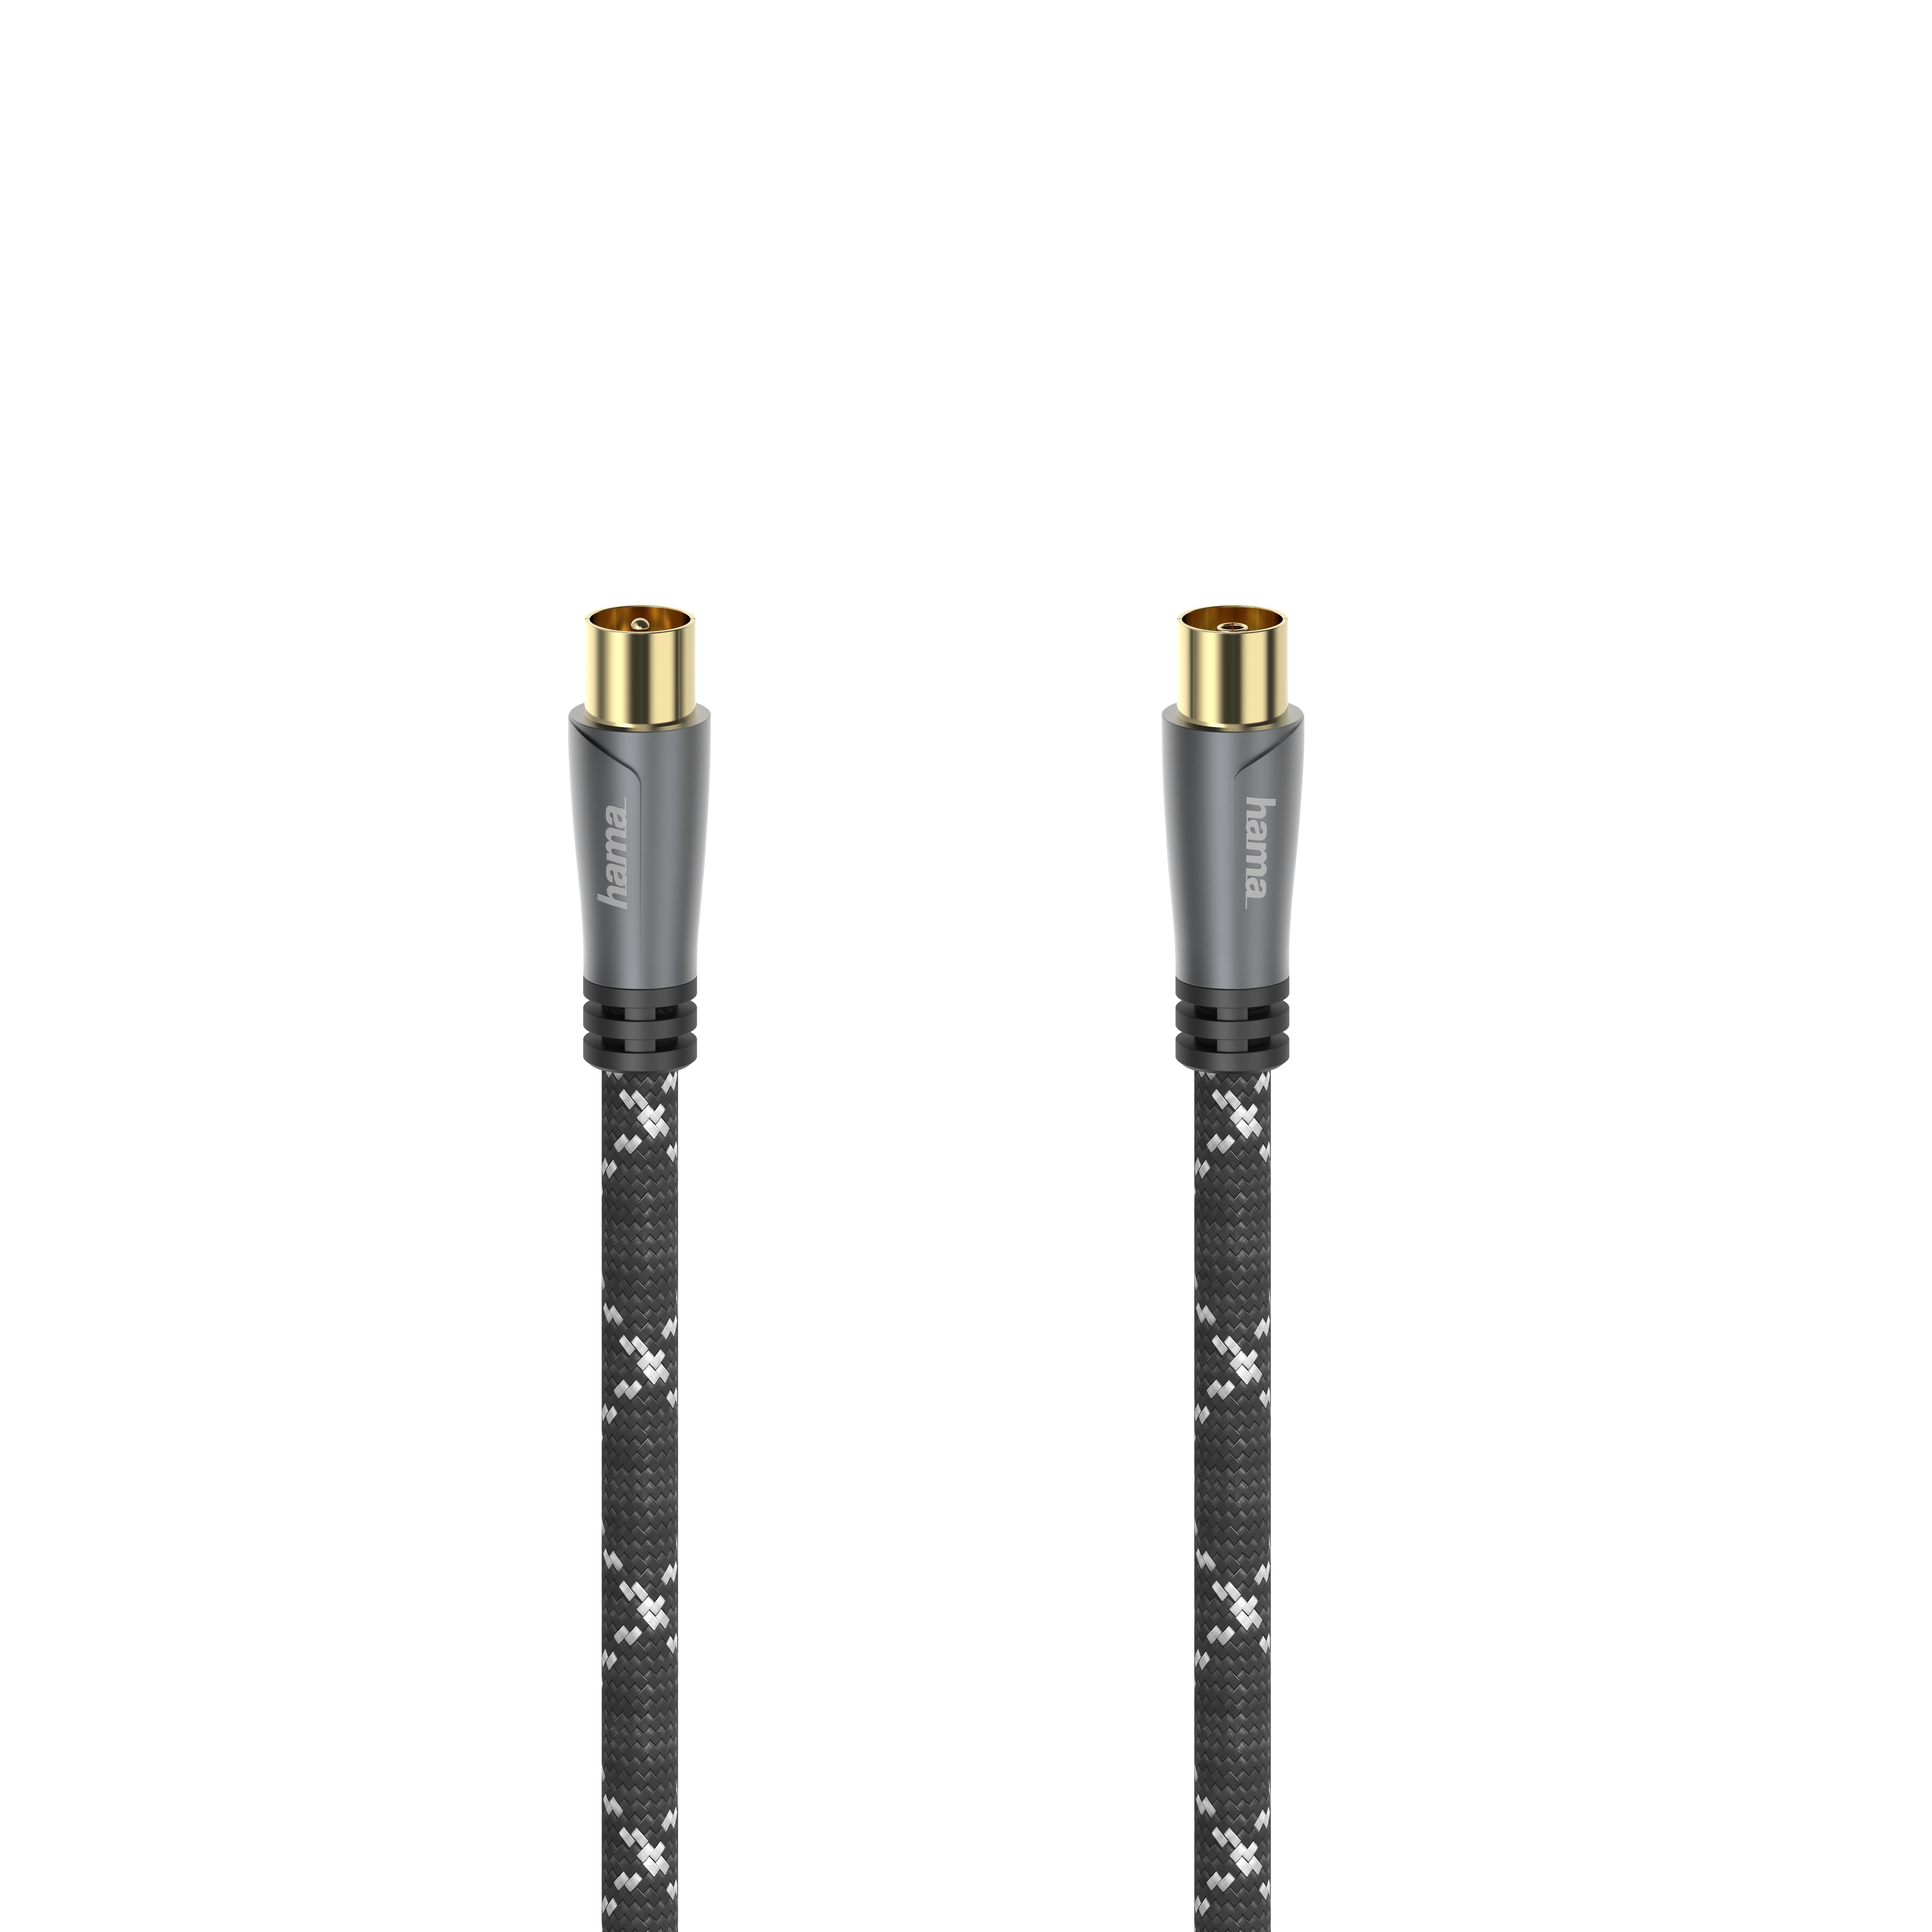 Hama Antennen-Kabel-Stecker-Kupplung, Metall, vergoldet, 1,5M